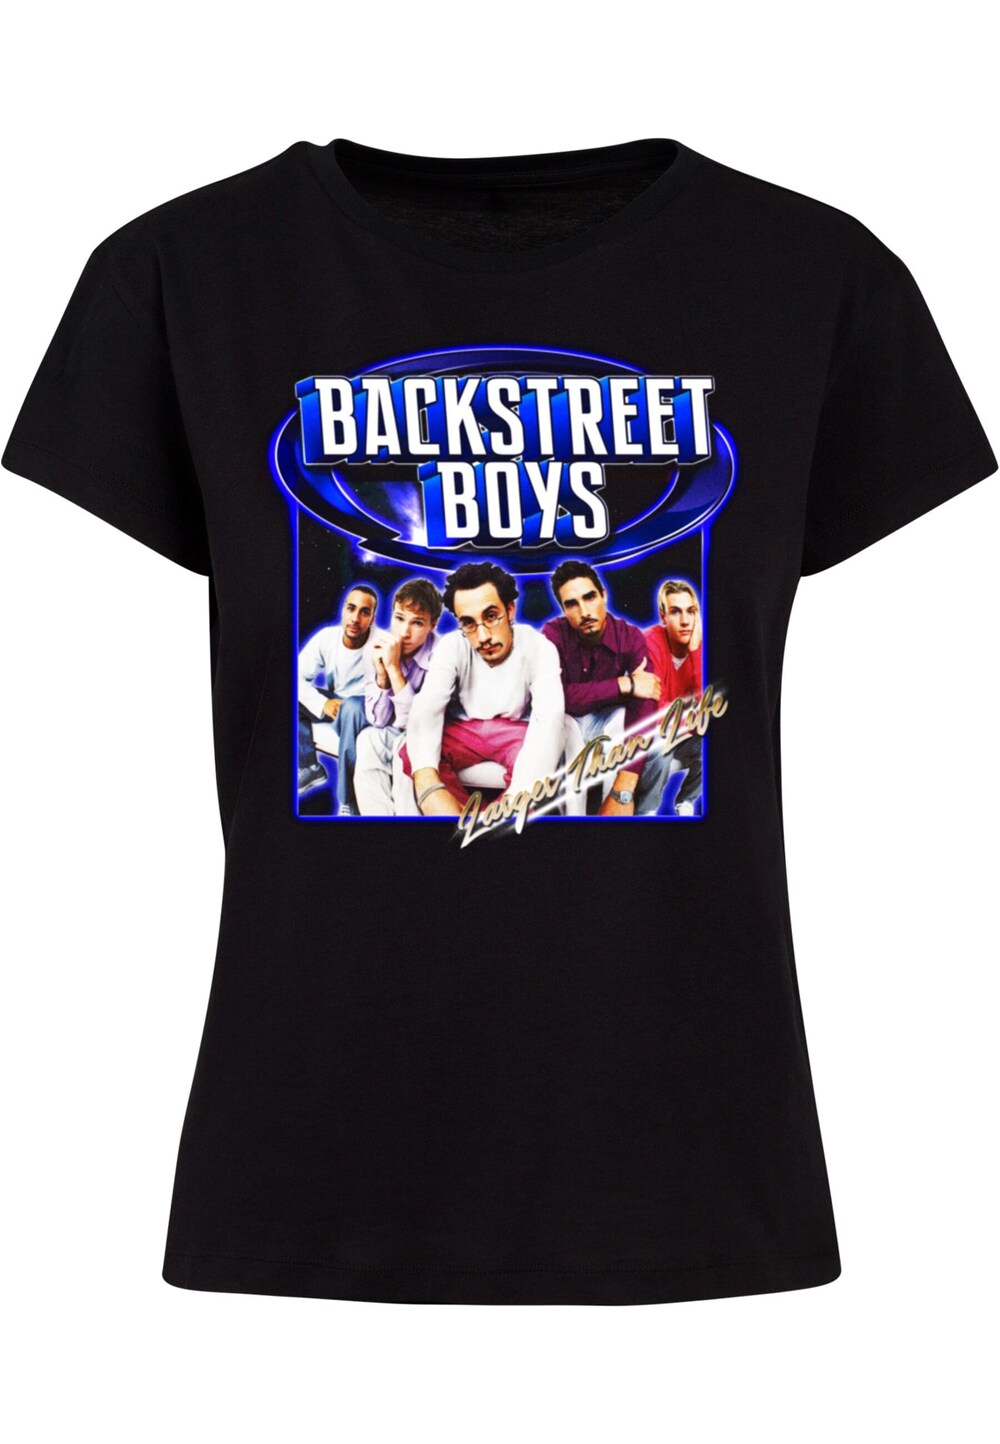 parks adele larger than life Рубашка Merchcode Backstreet Boys - Larger Than Life, черный